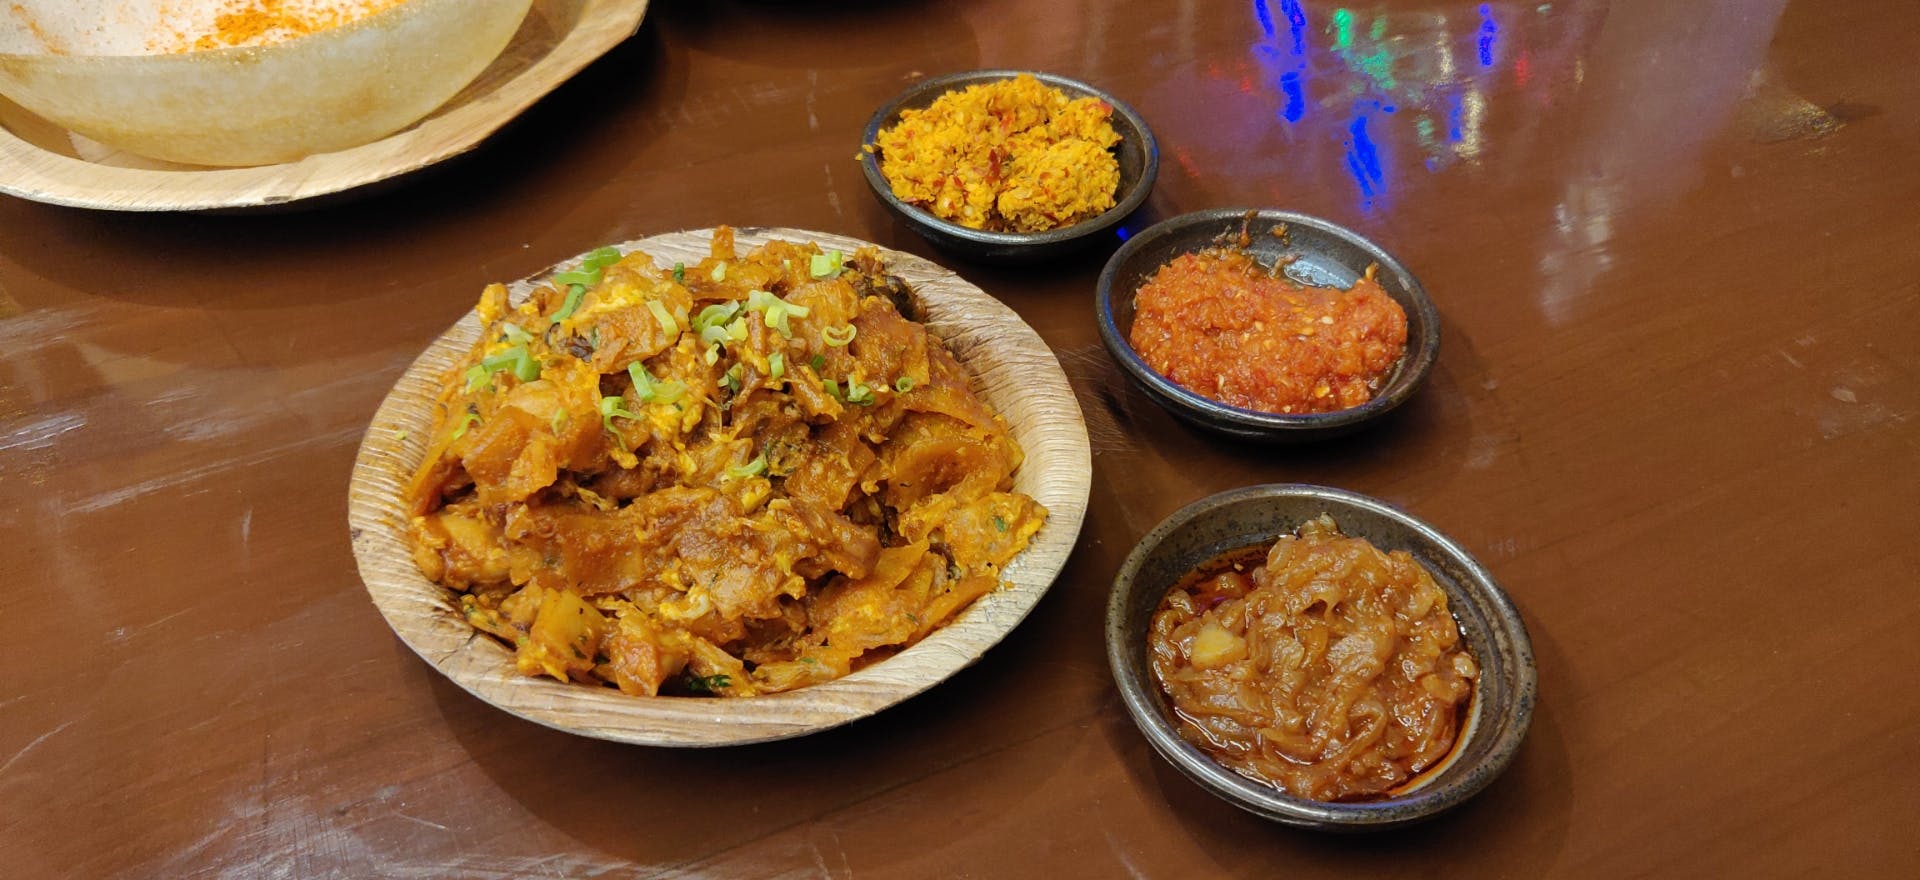 Dish,Food,Cuisine,Ingredient,Produce,Katsudon,Side dish,Recipe,Meal,Indian cuisine